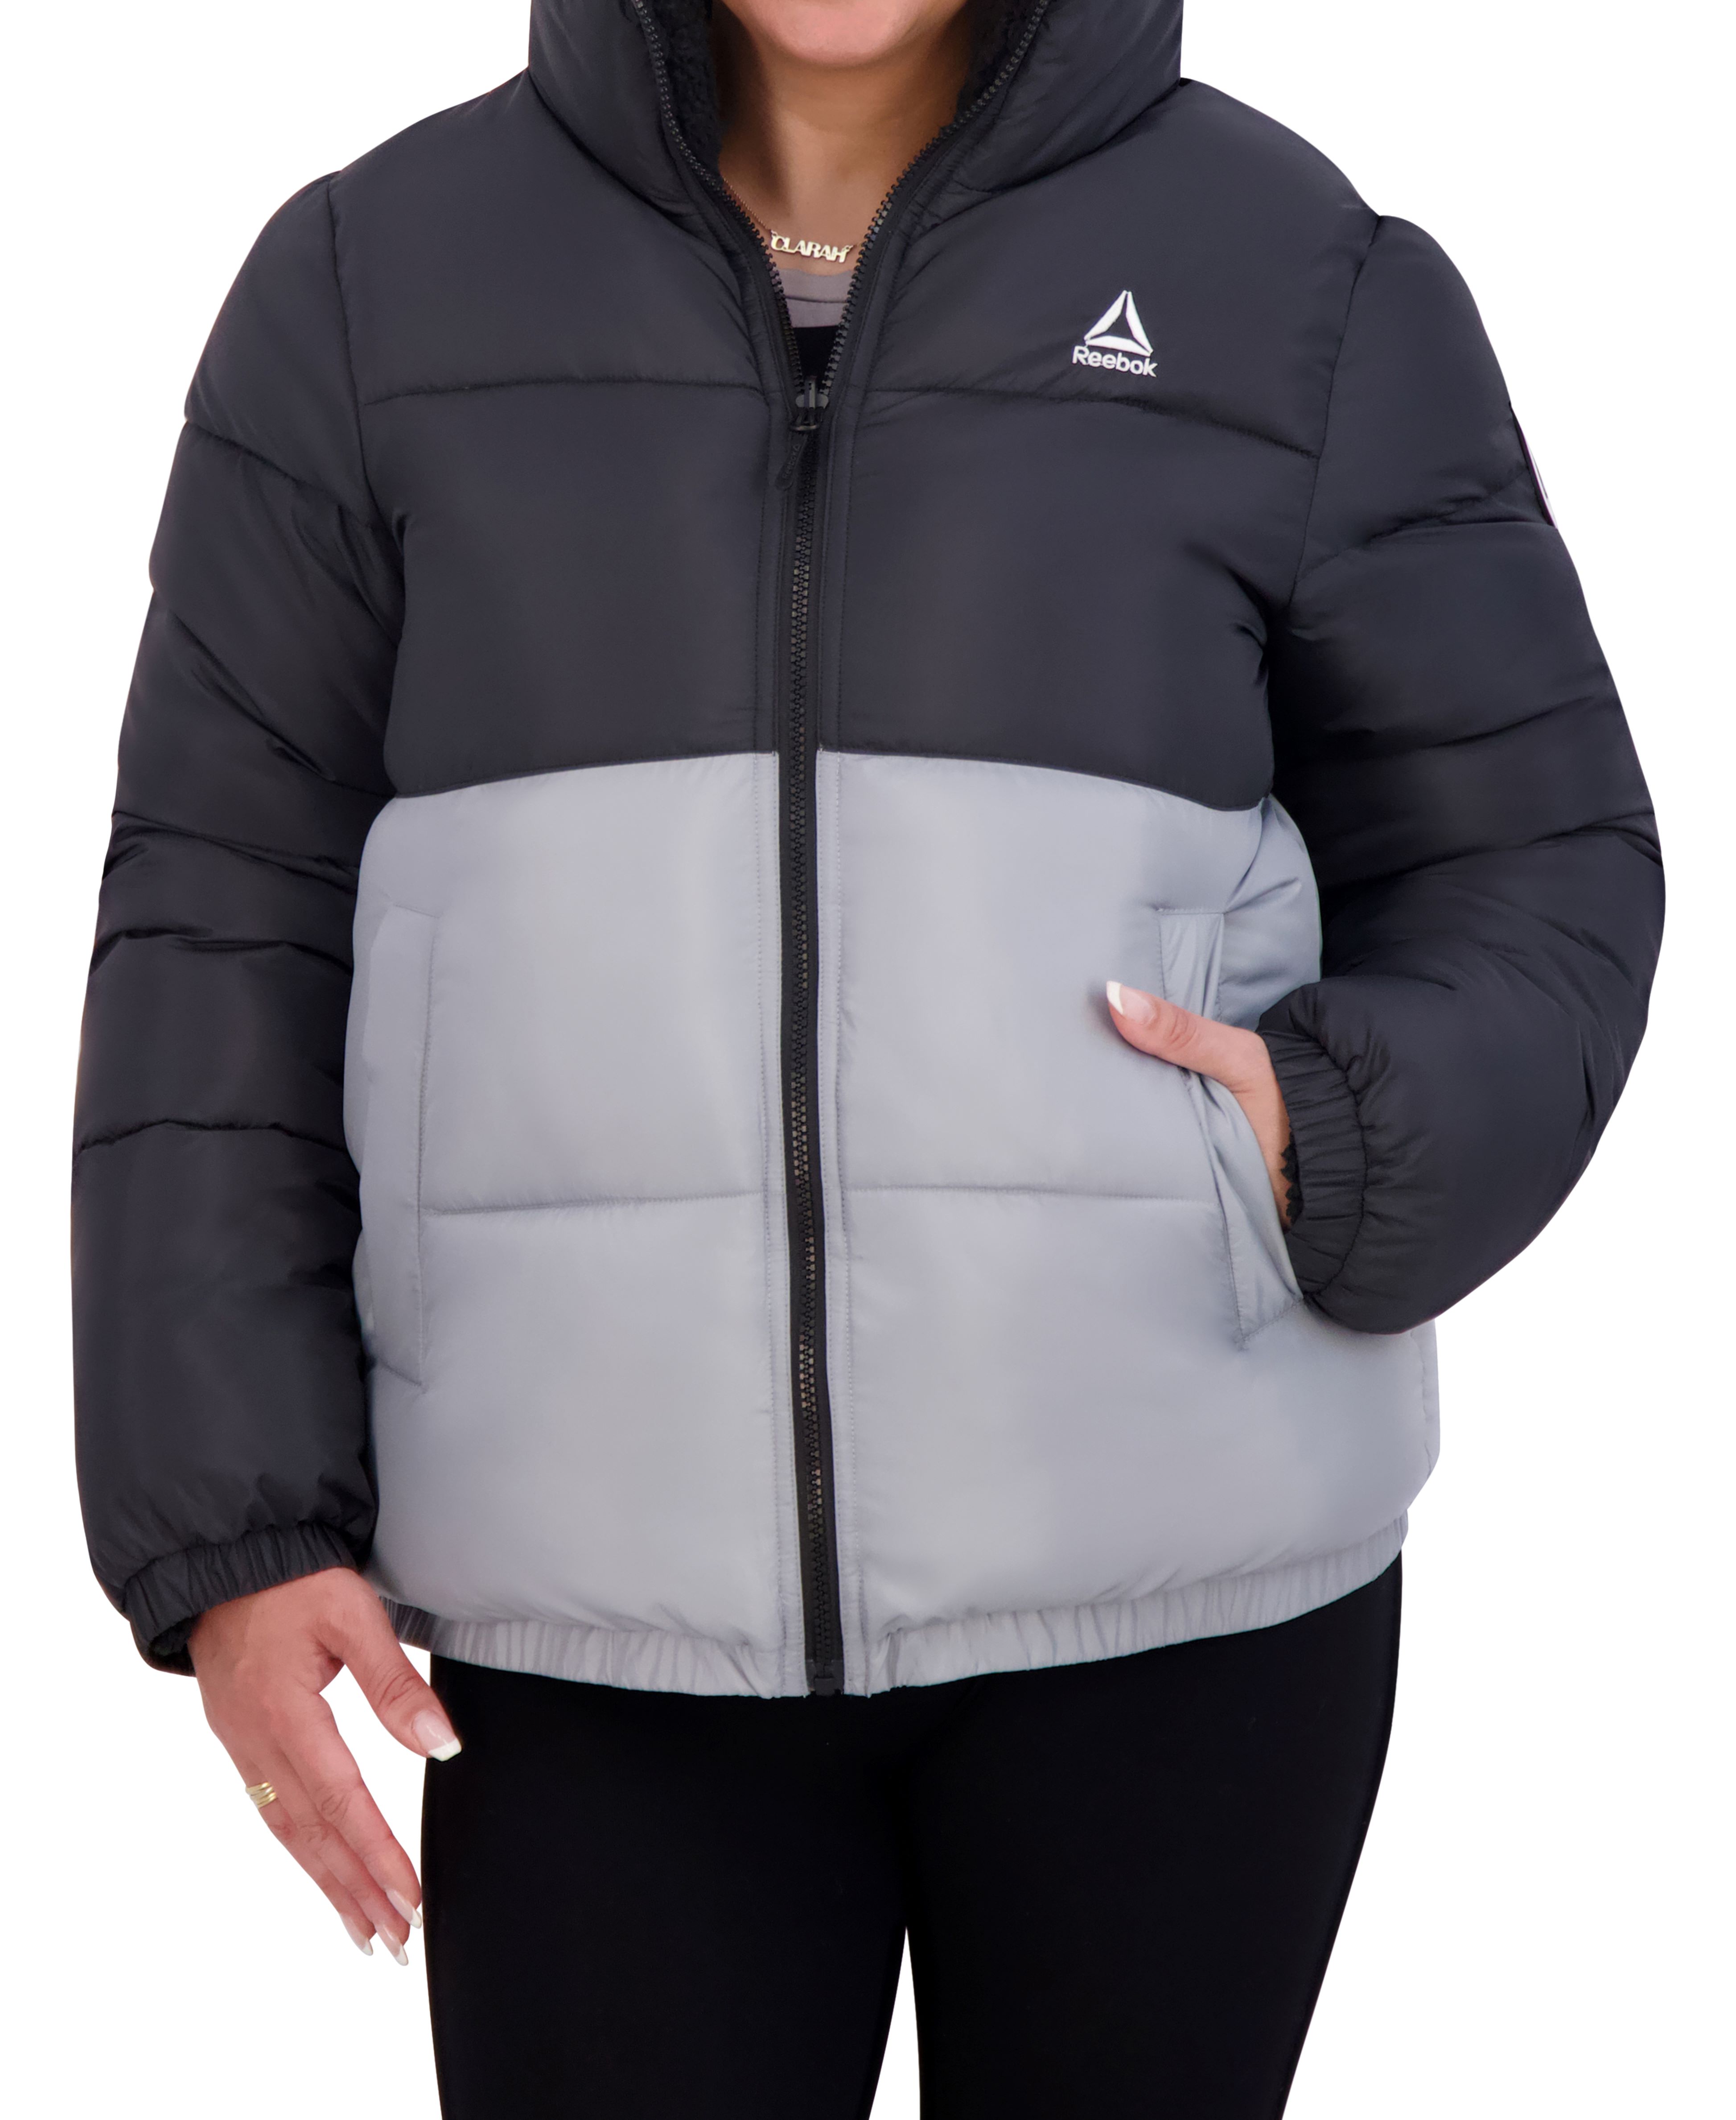 Reebok Women's Reversible Puffer and Faux Shearling Jacket, Sizes XS-3X - image 1 of 6